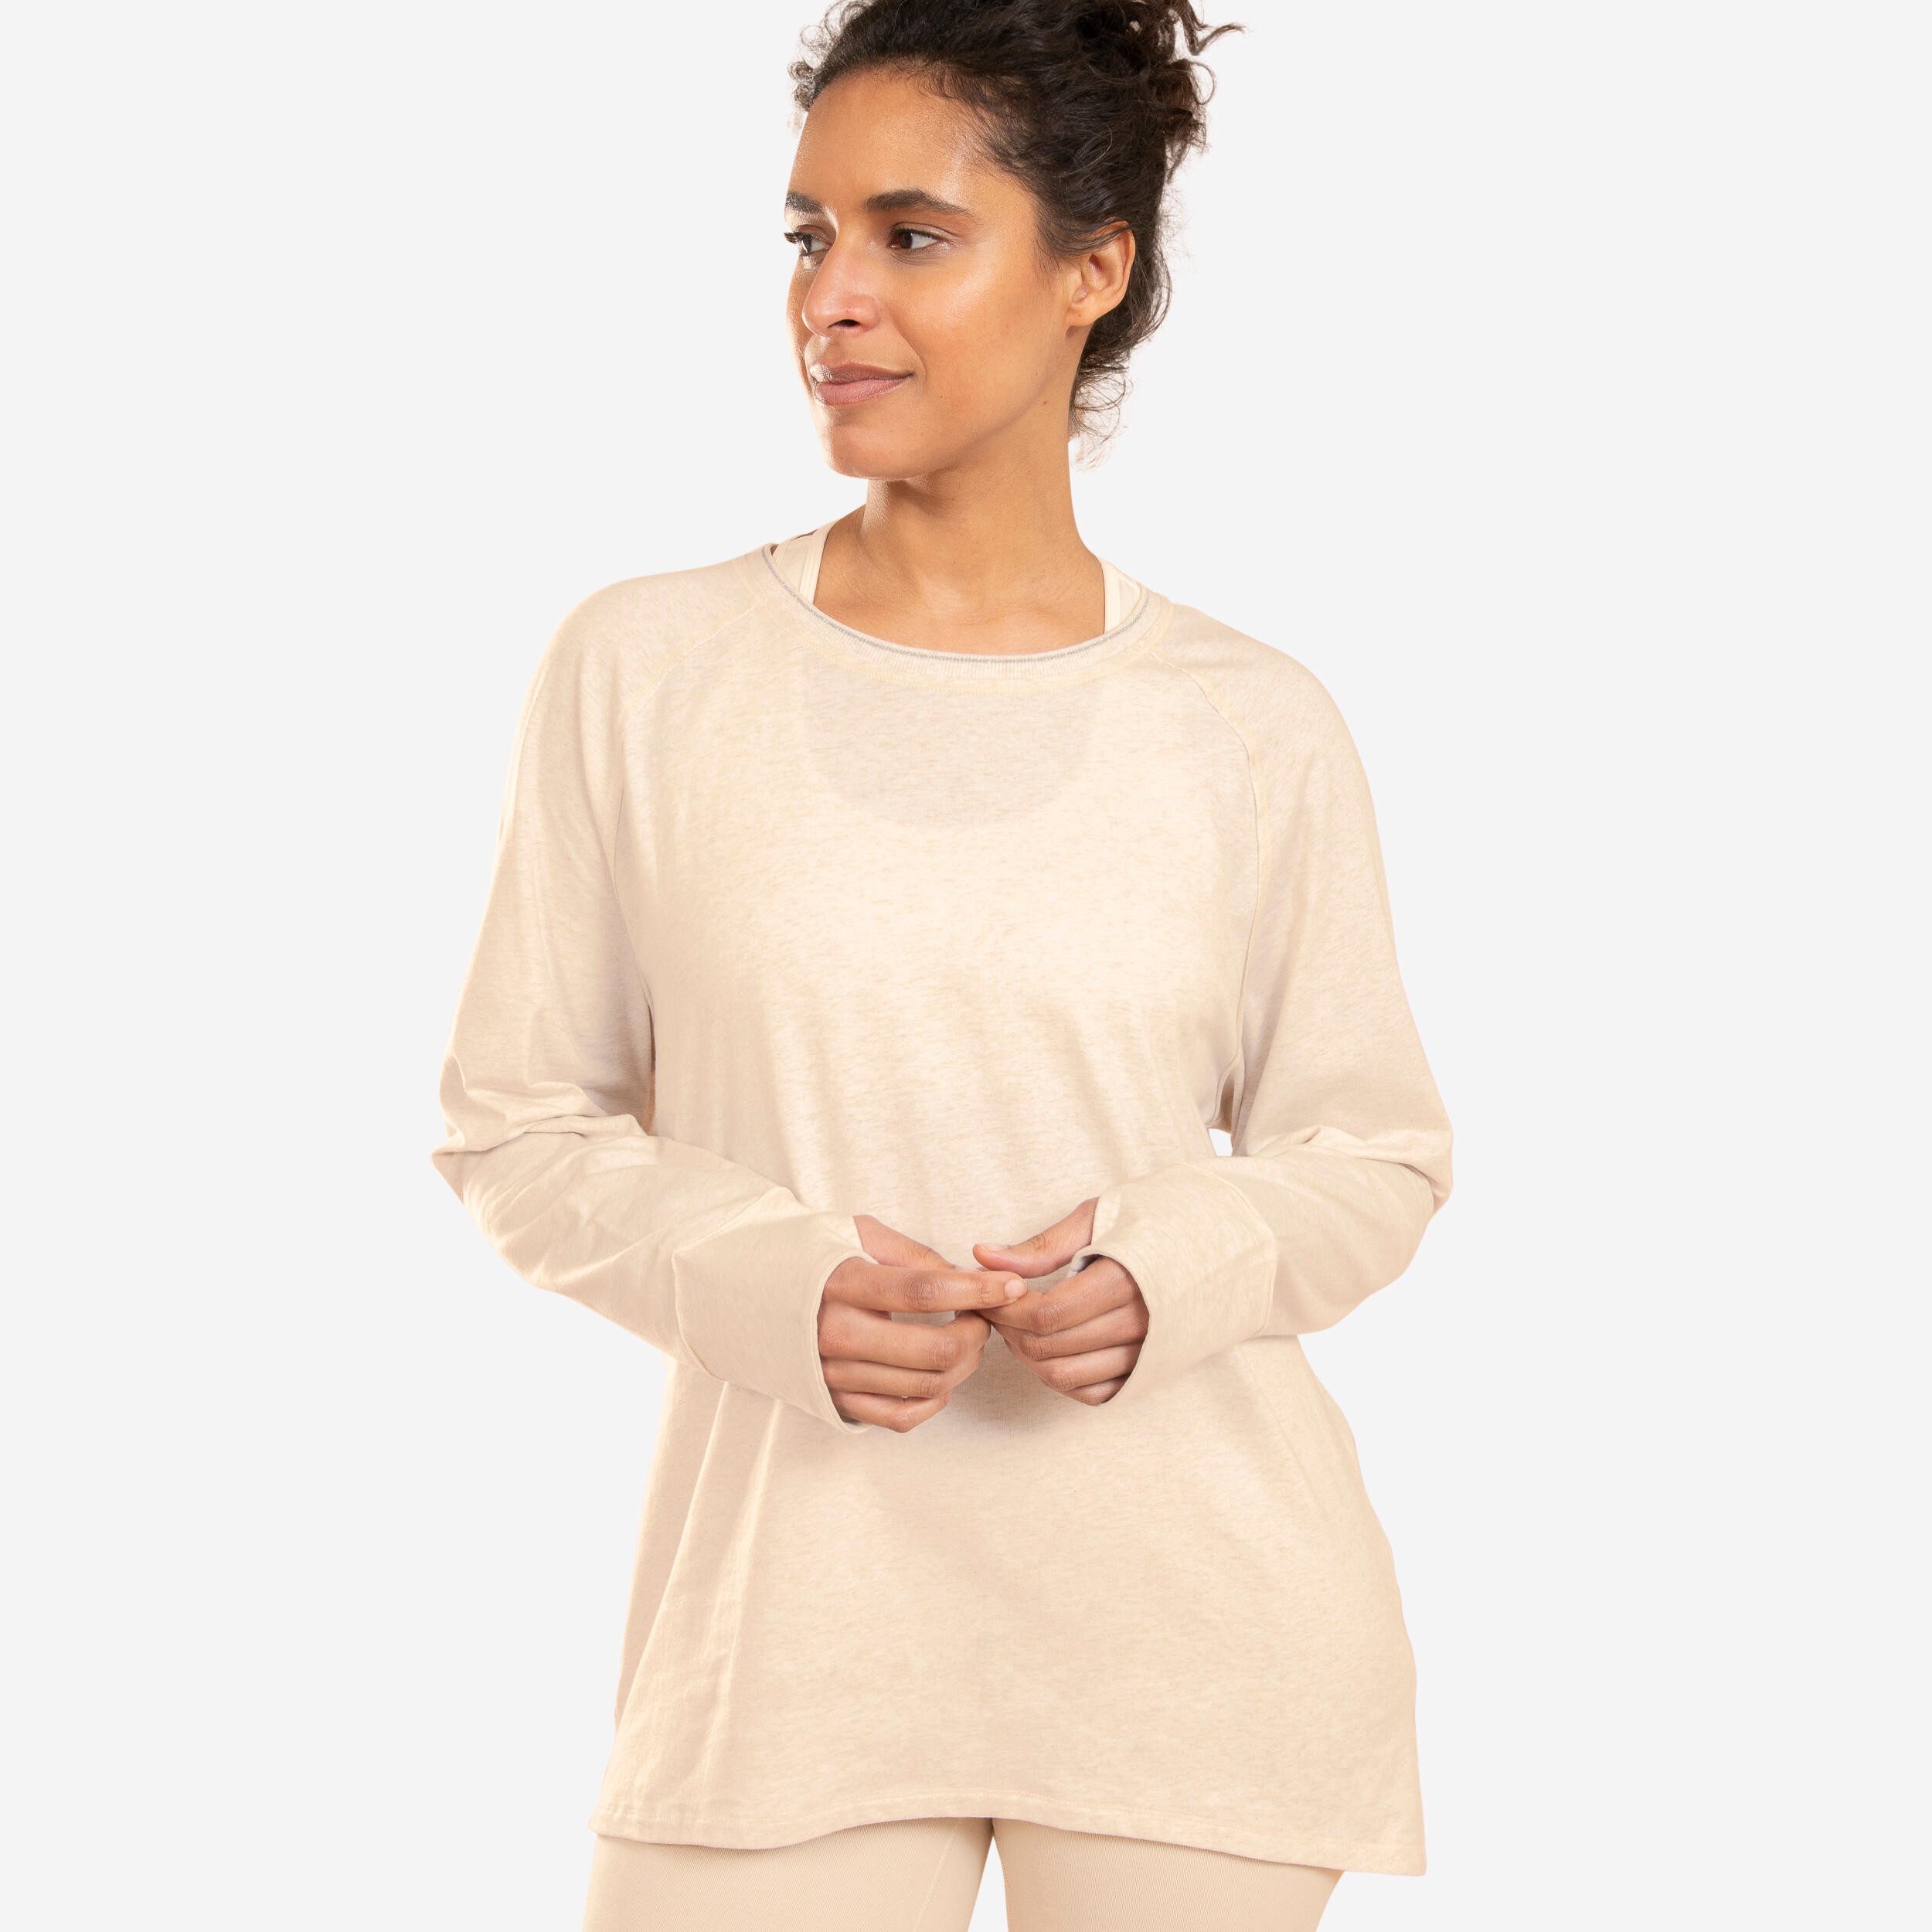 Women's Long-sleeved yoga shirt